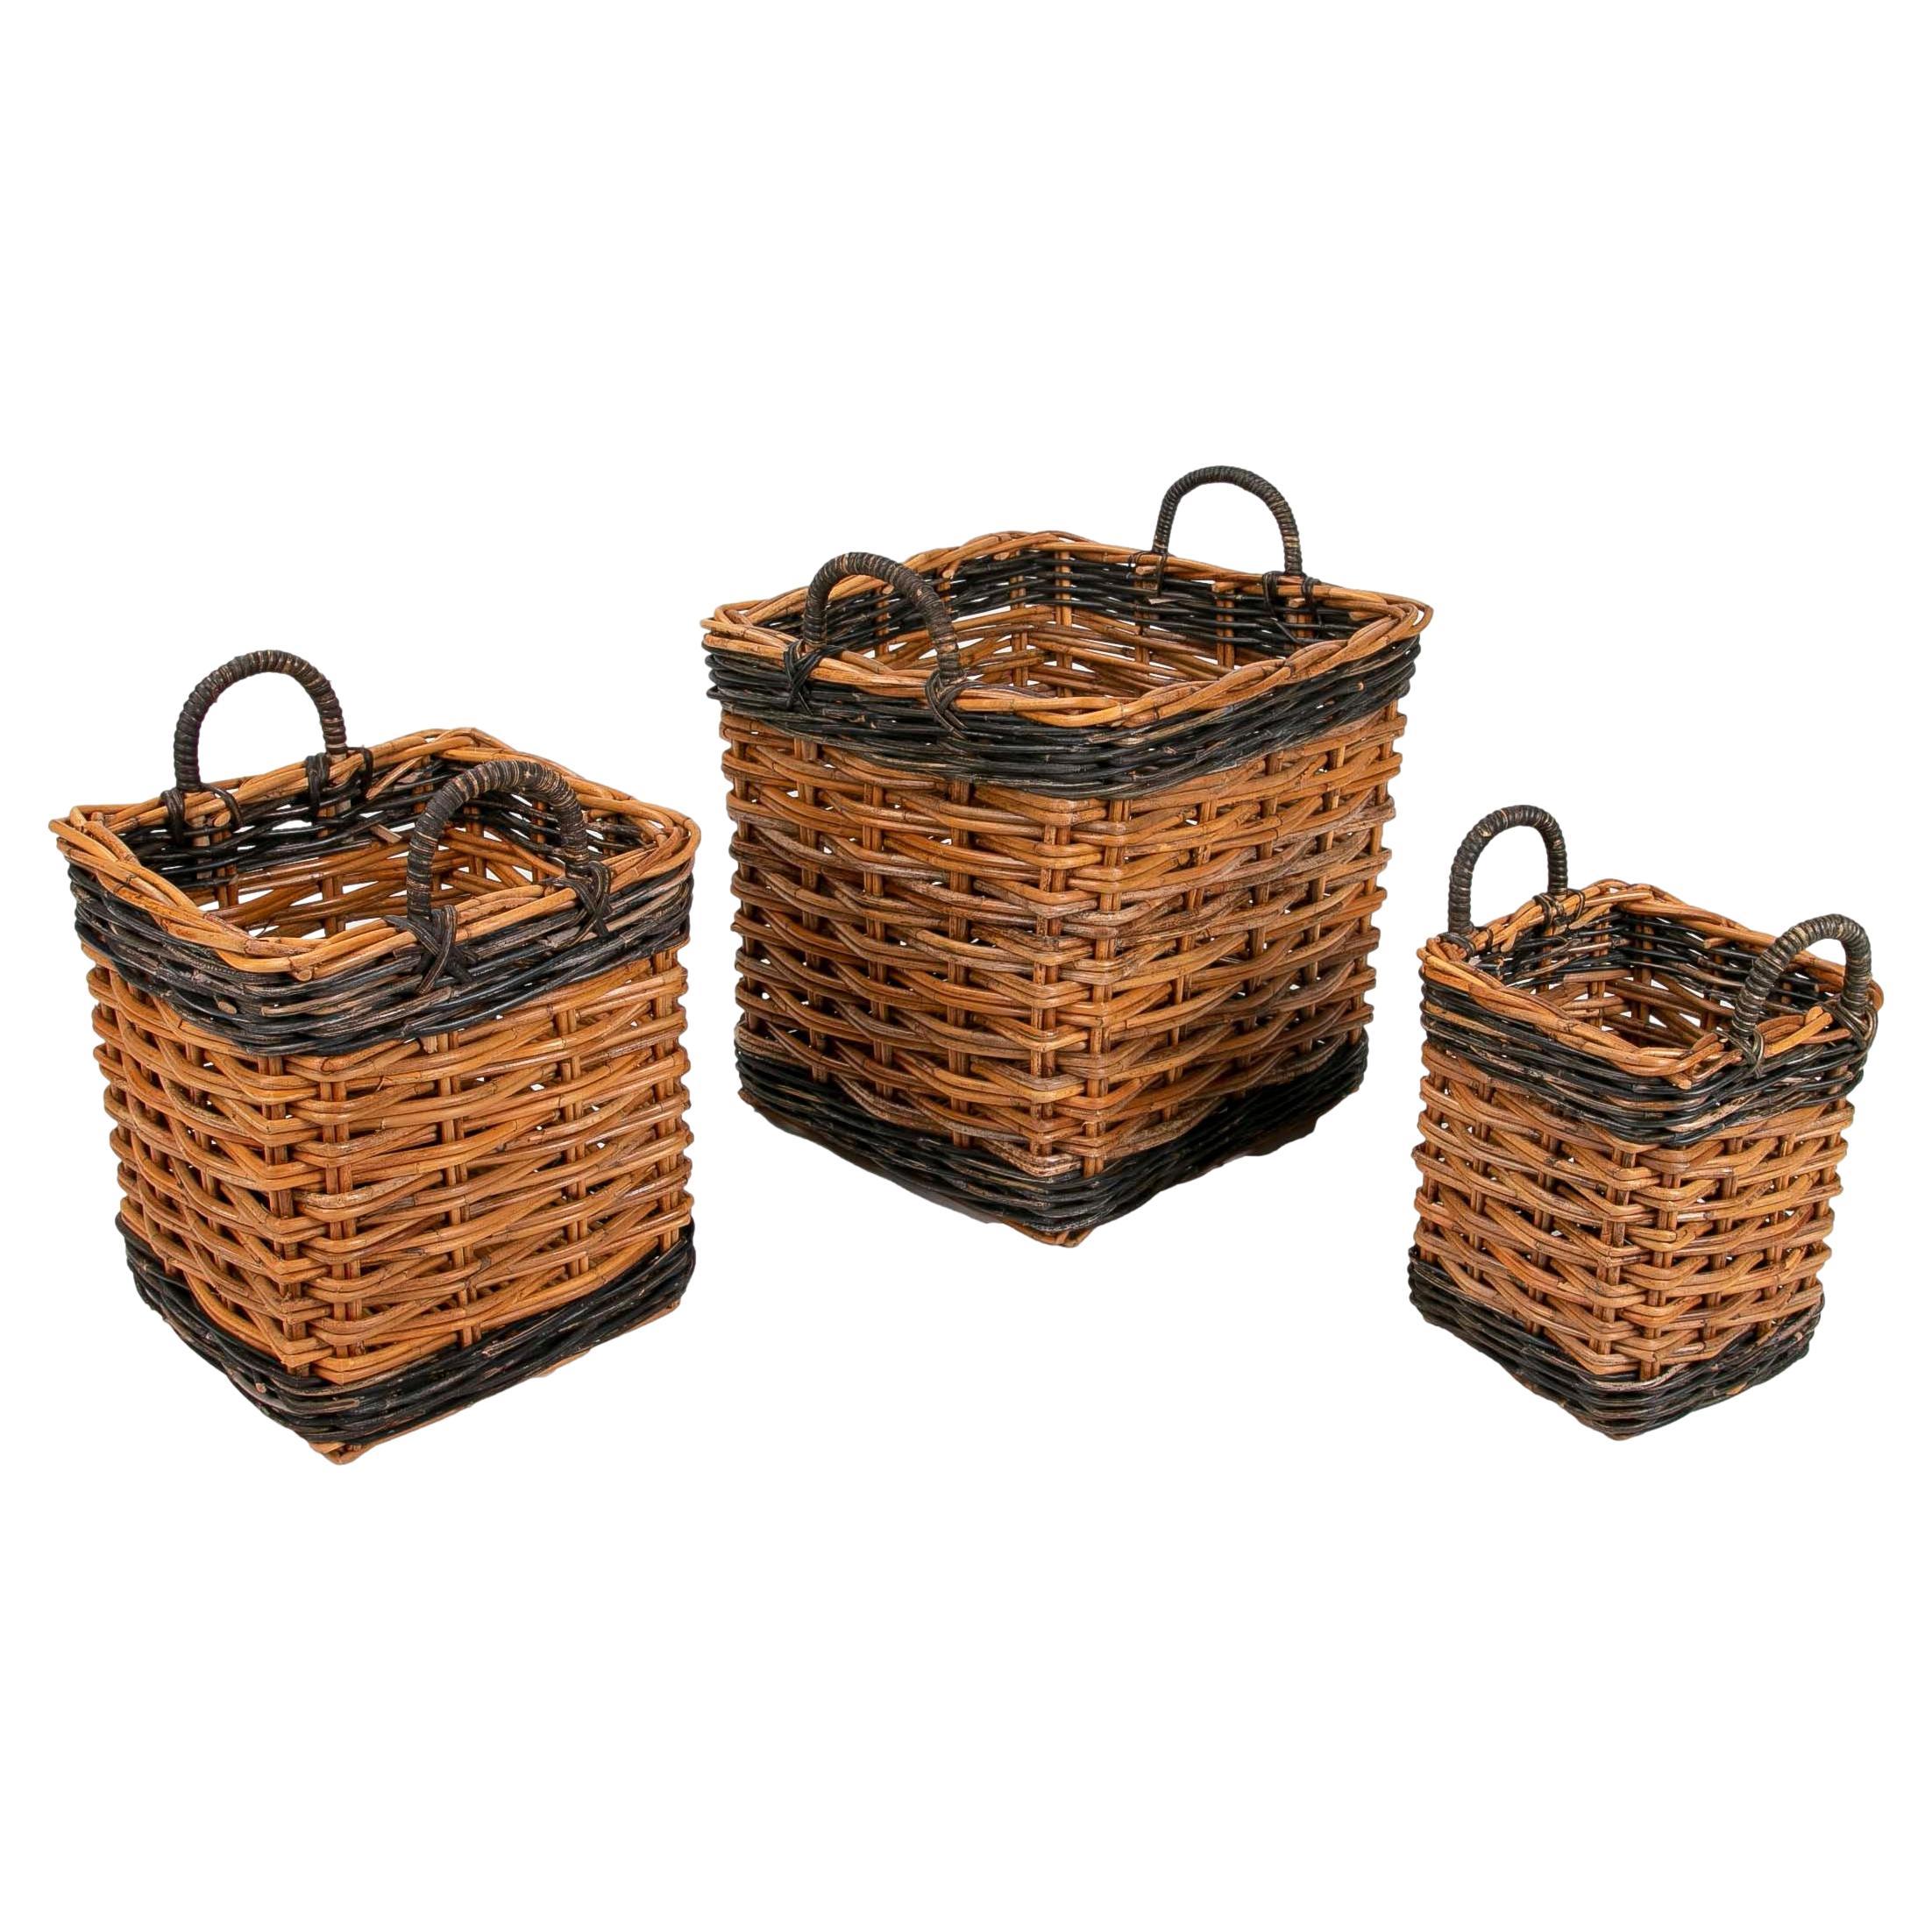 Set Consisting of Three Handmade Wicker Baskets